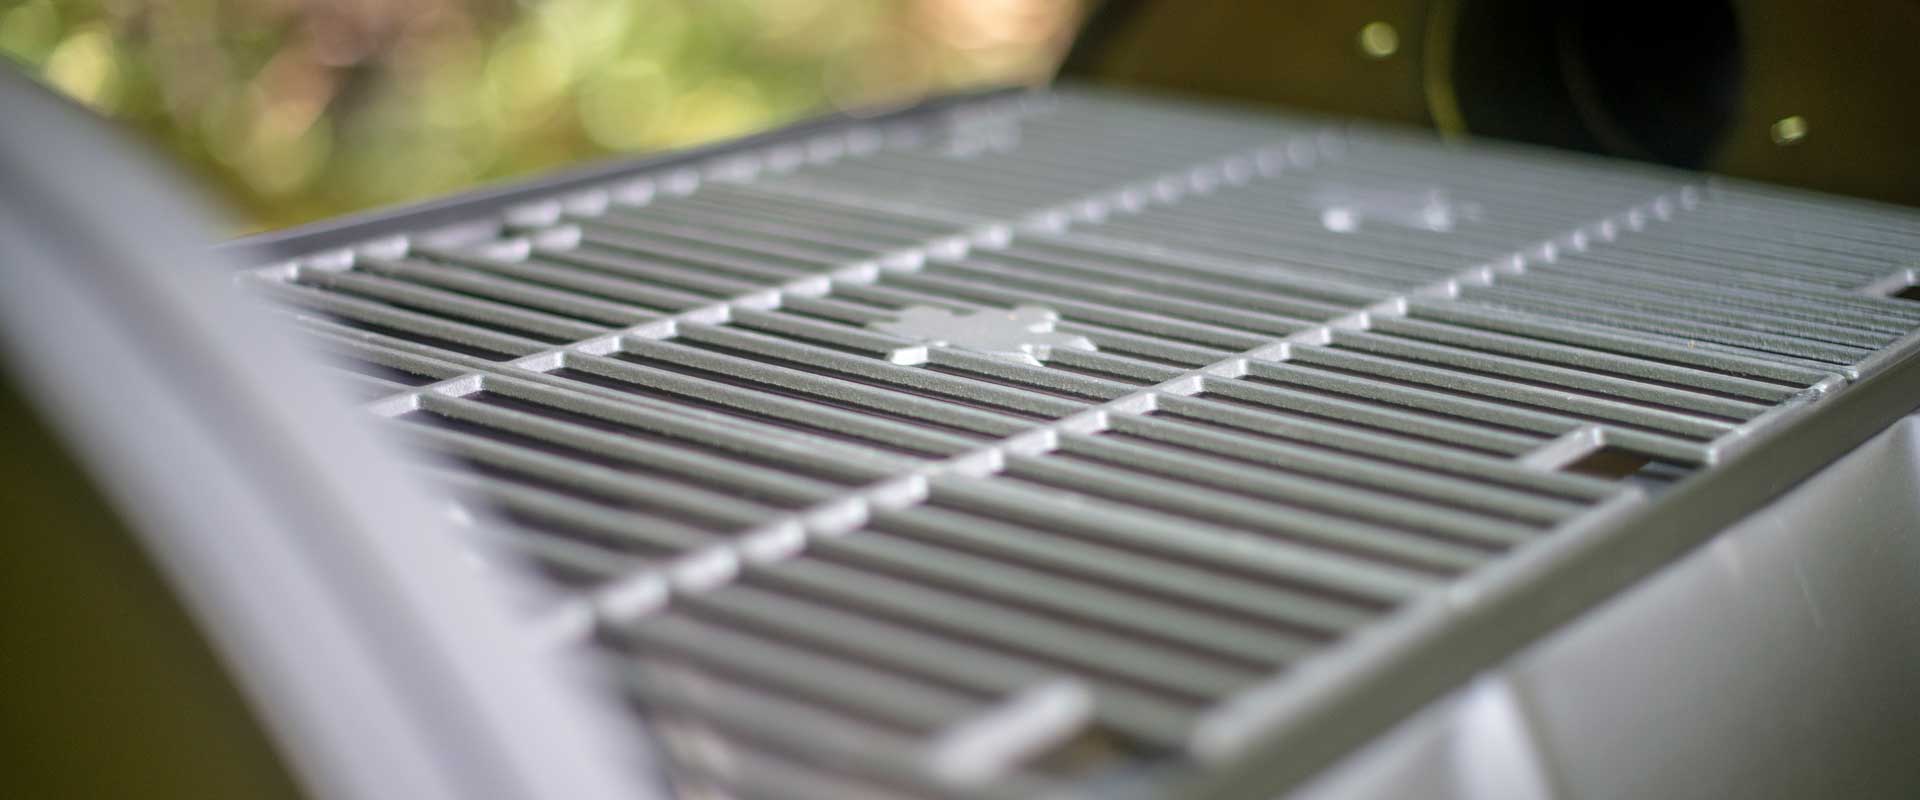 sapling evaporator closeup of grill